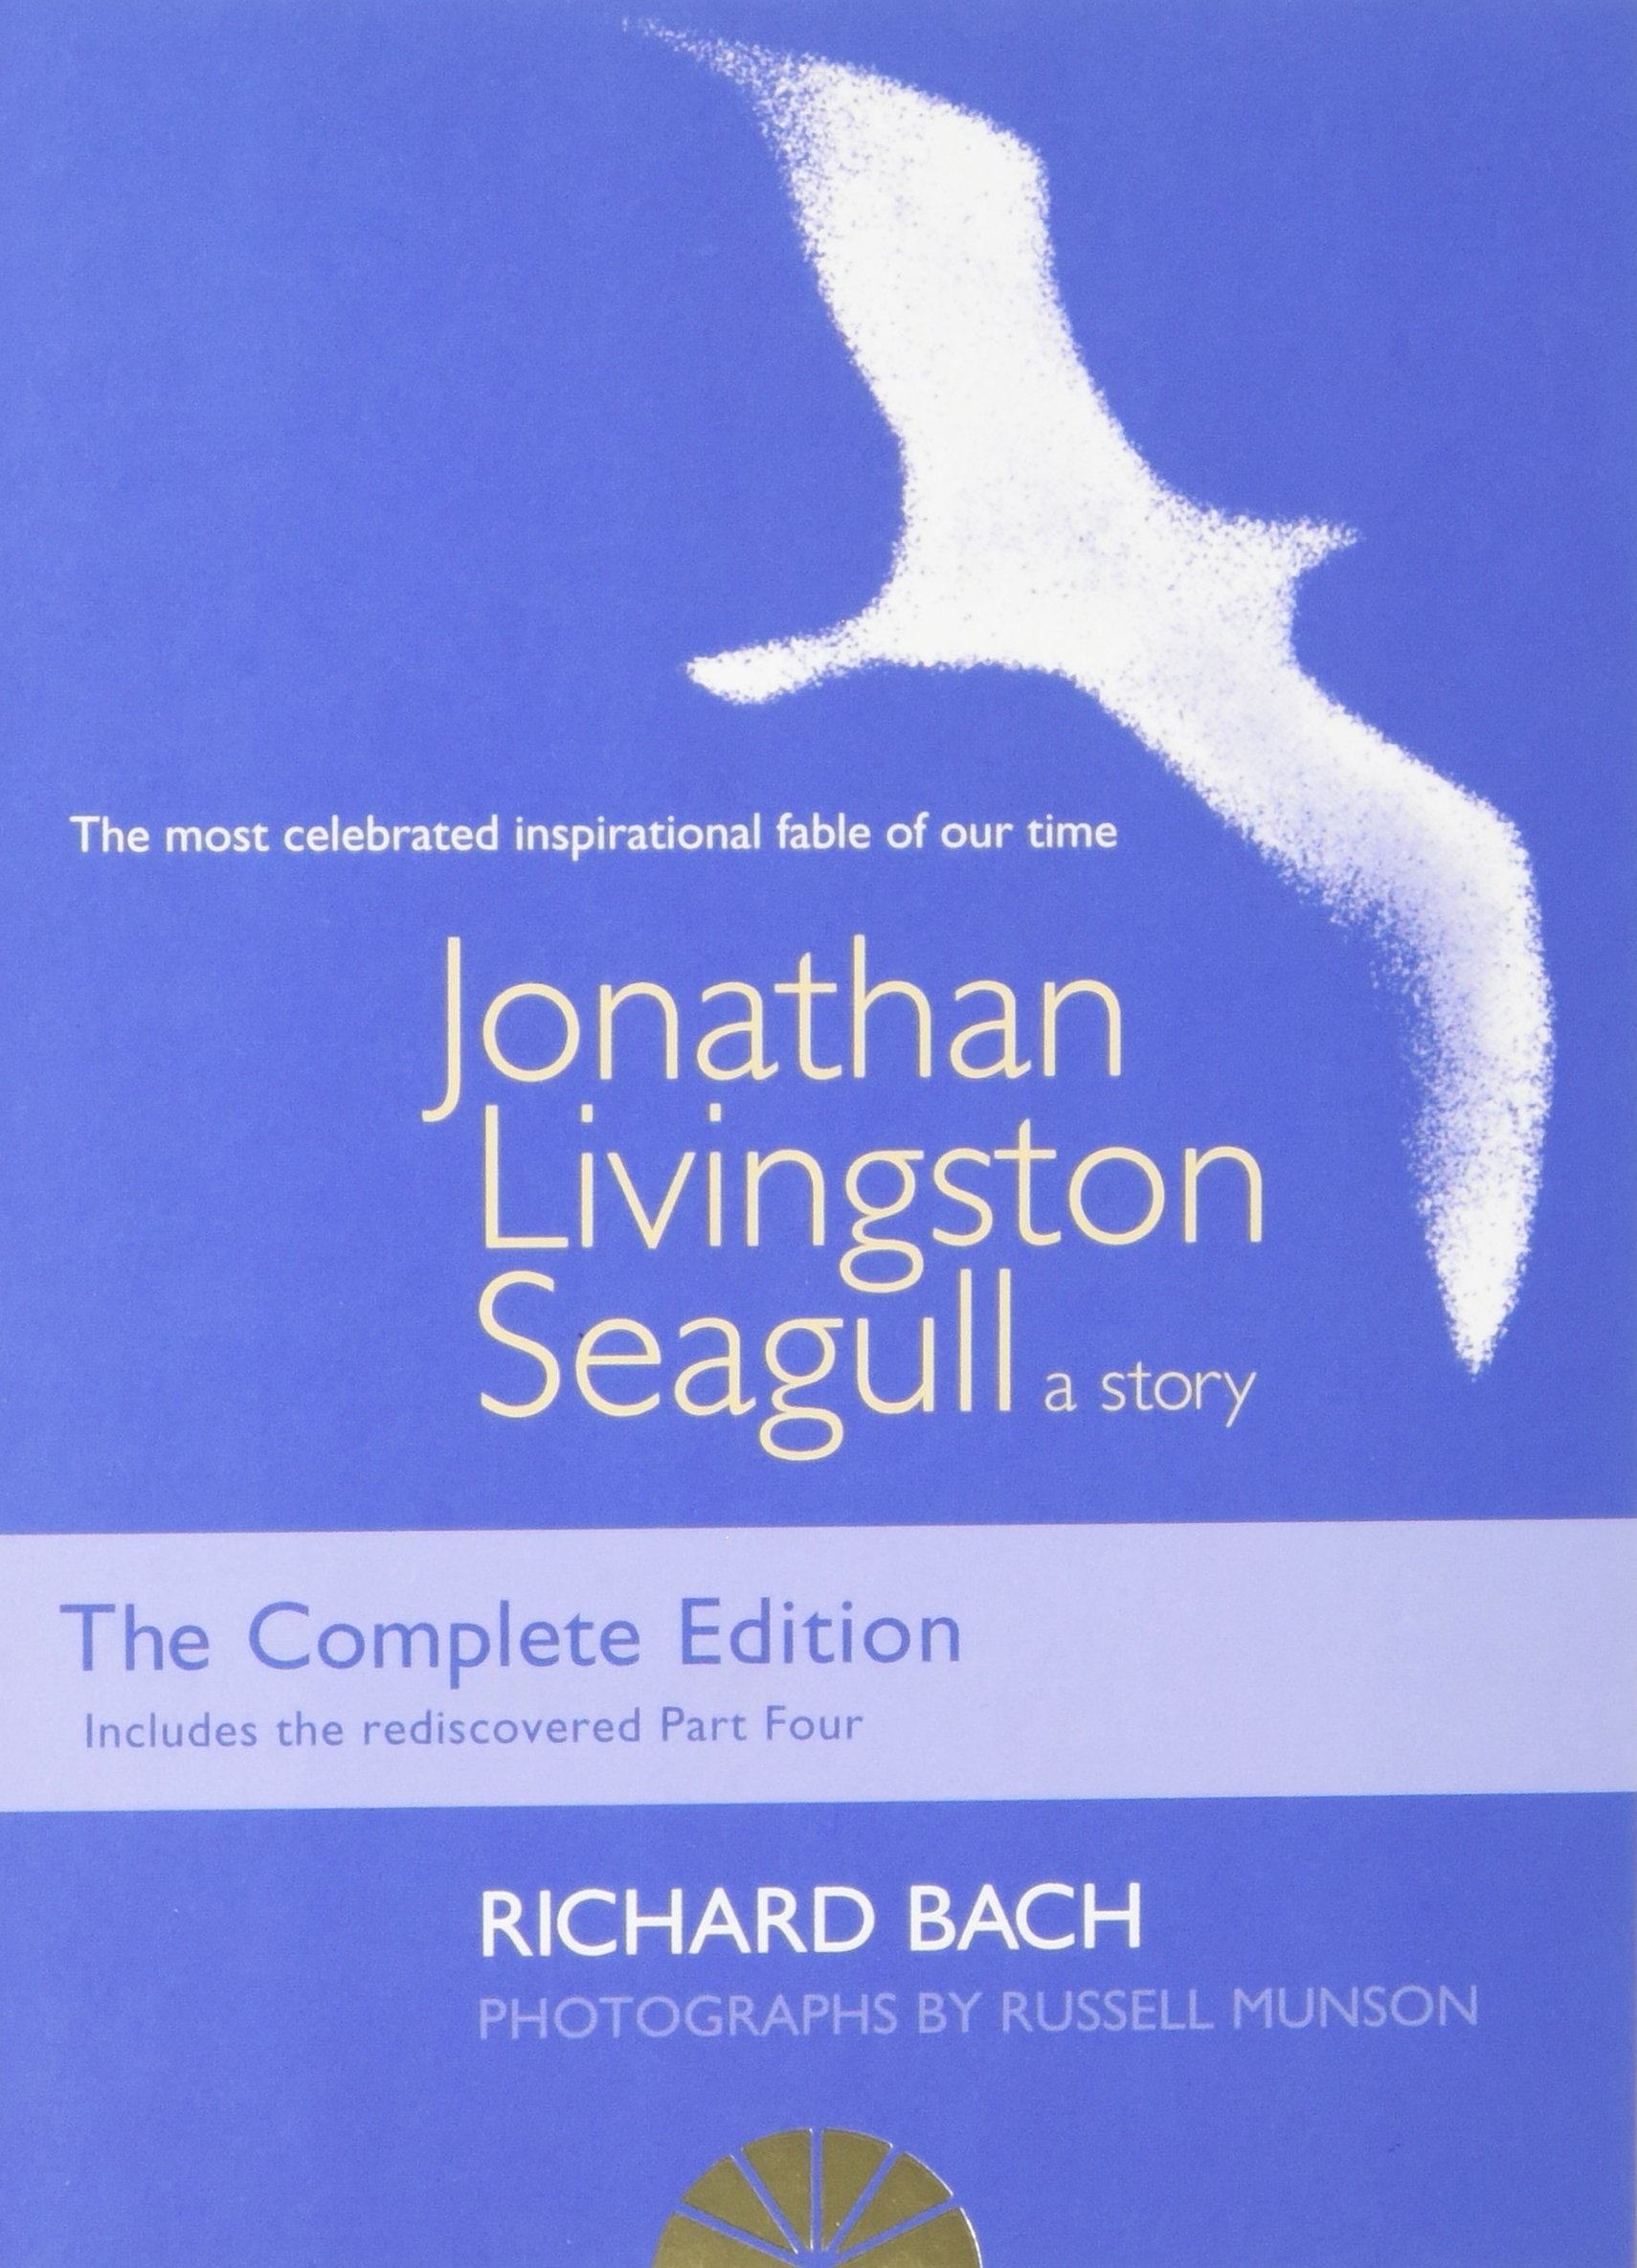 jonathan livingston seagull original book